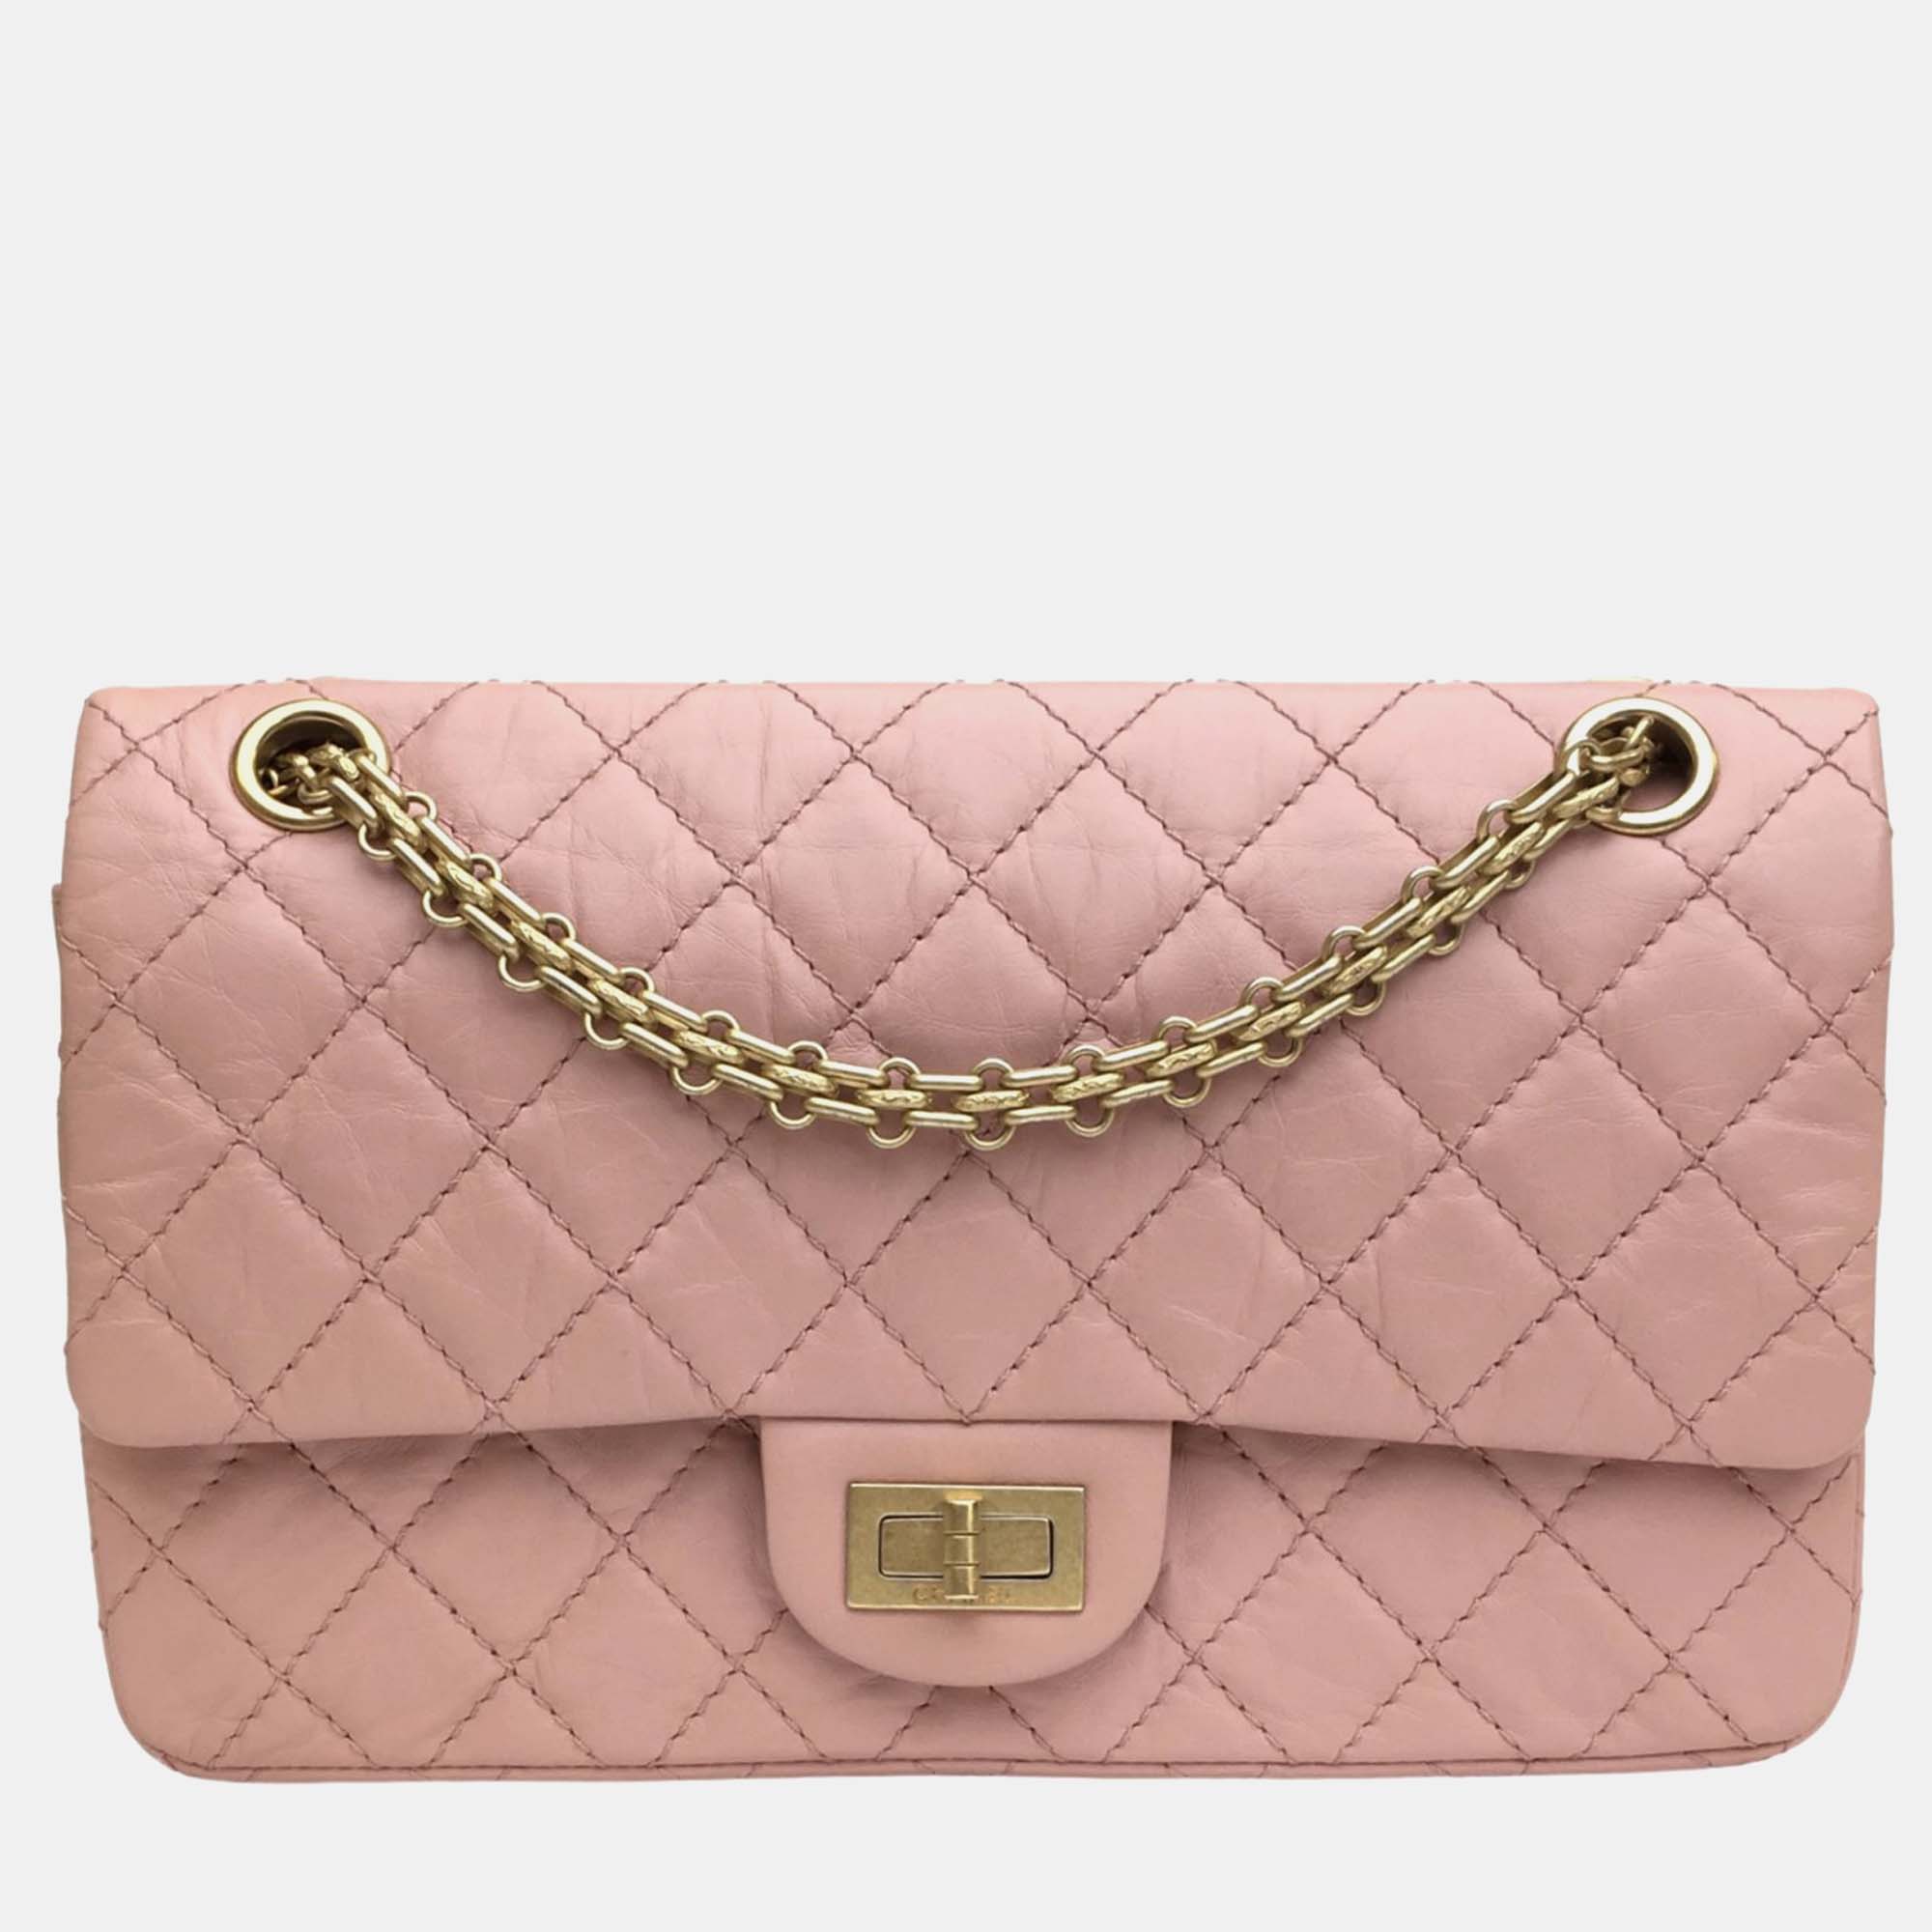 Chanel pink fabric 225 reissue 2.55 shoulder bag